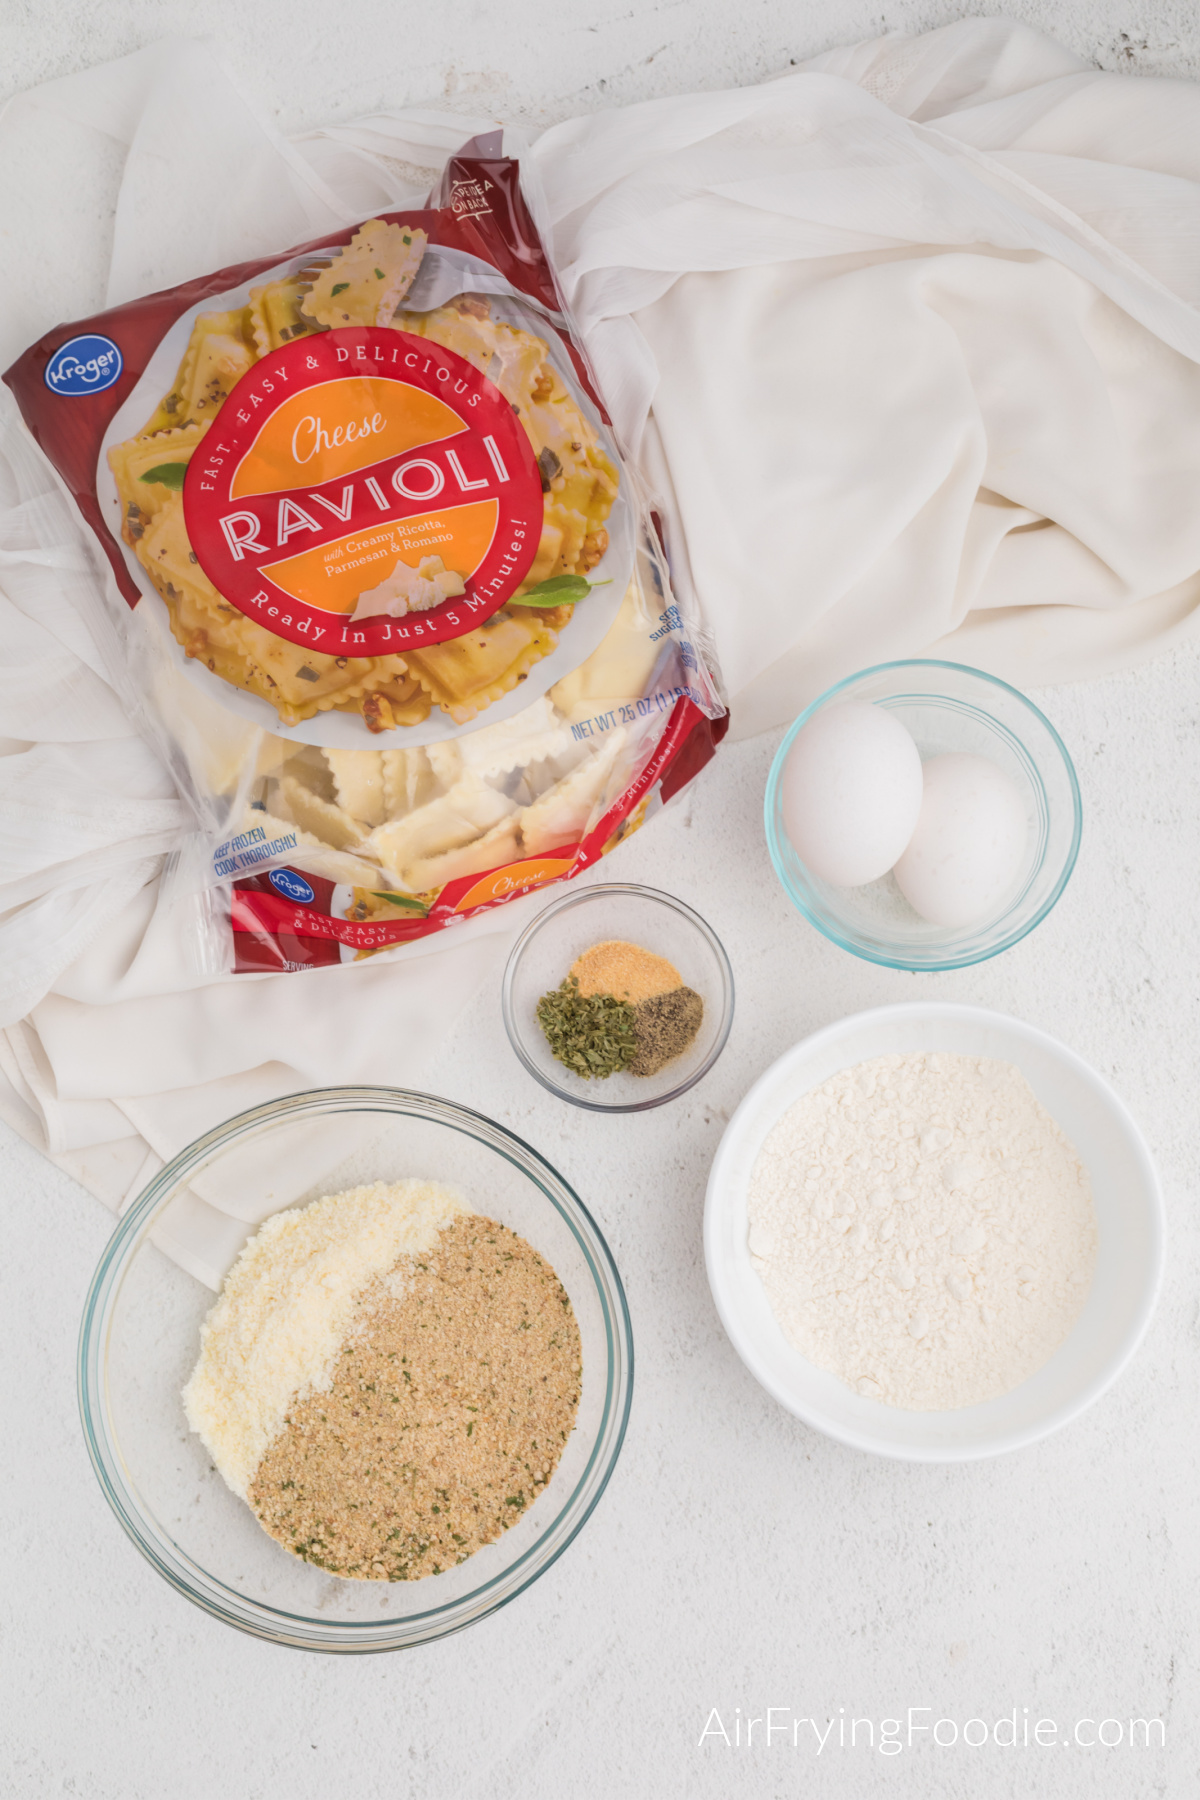 Frozen ravioli and ingredients needed to make fried ravioli in the air fryer.